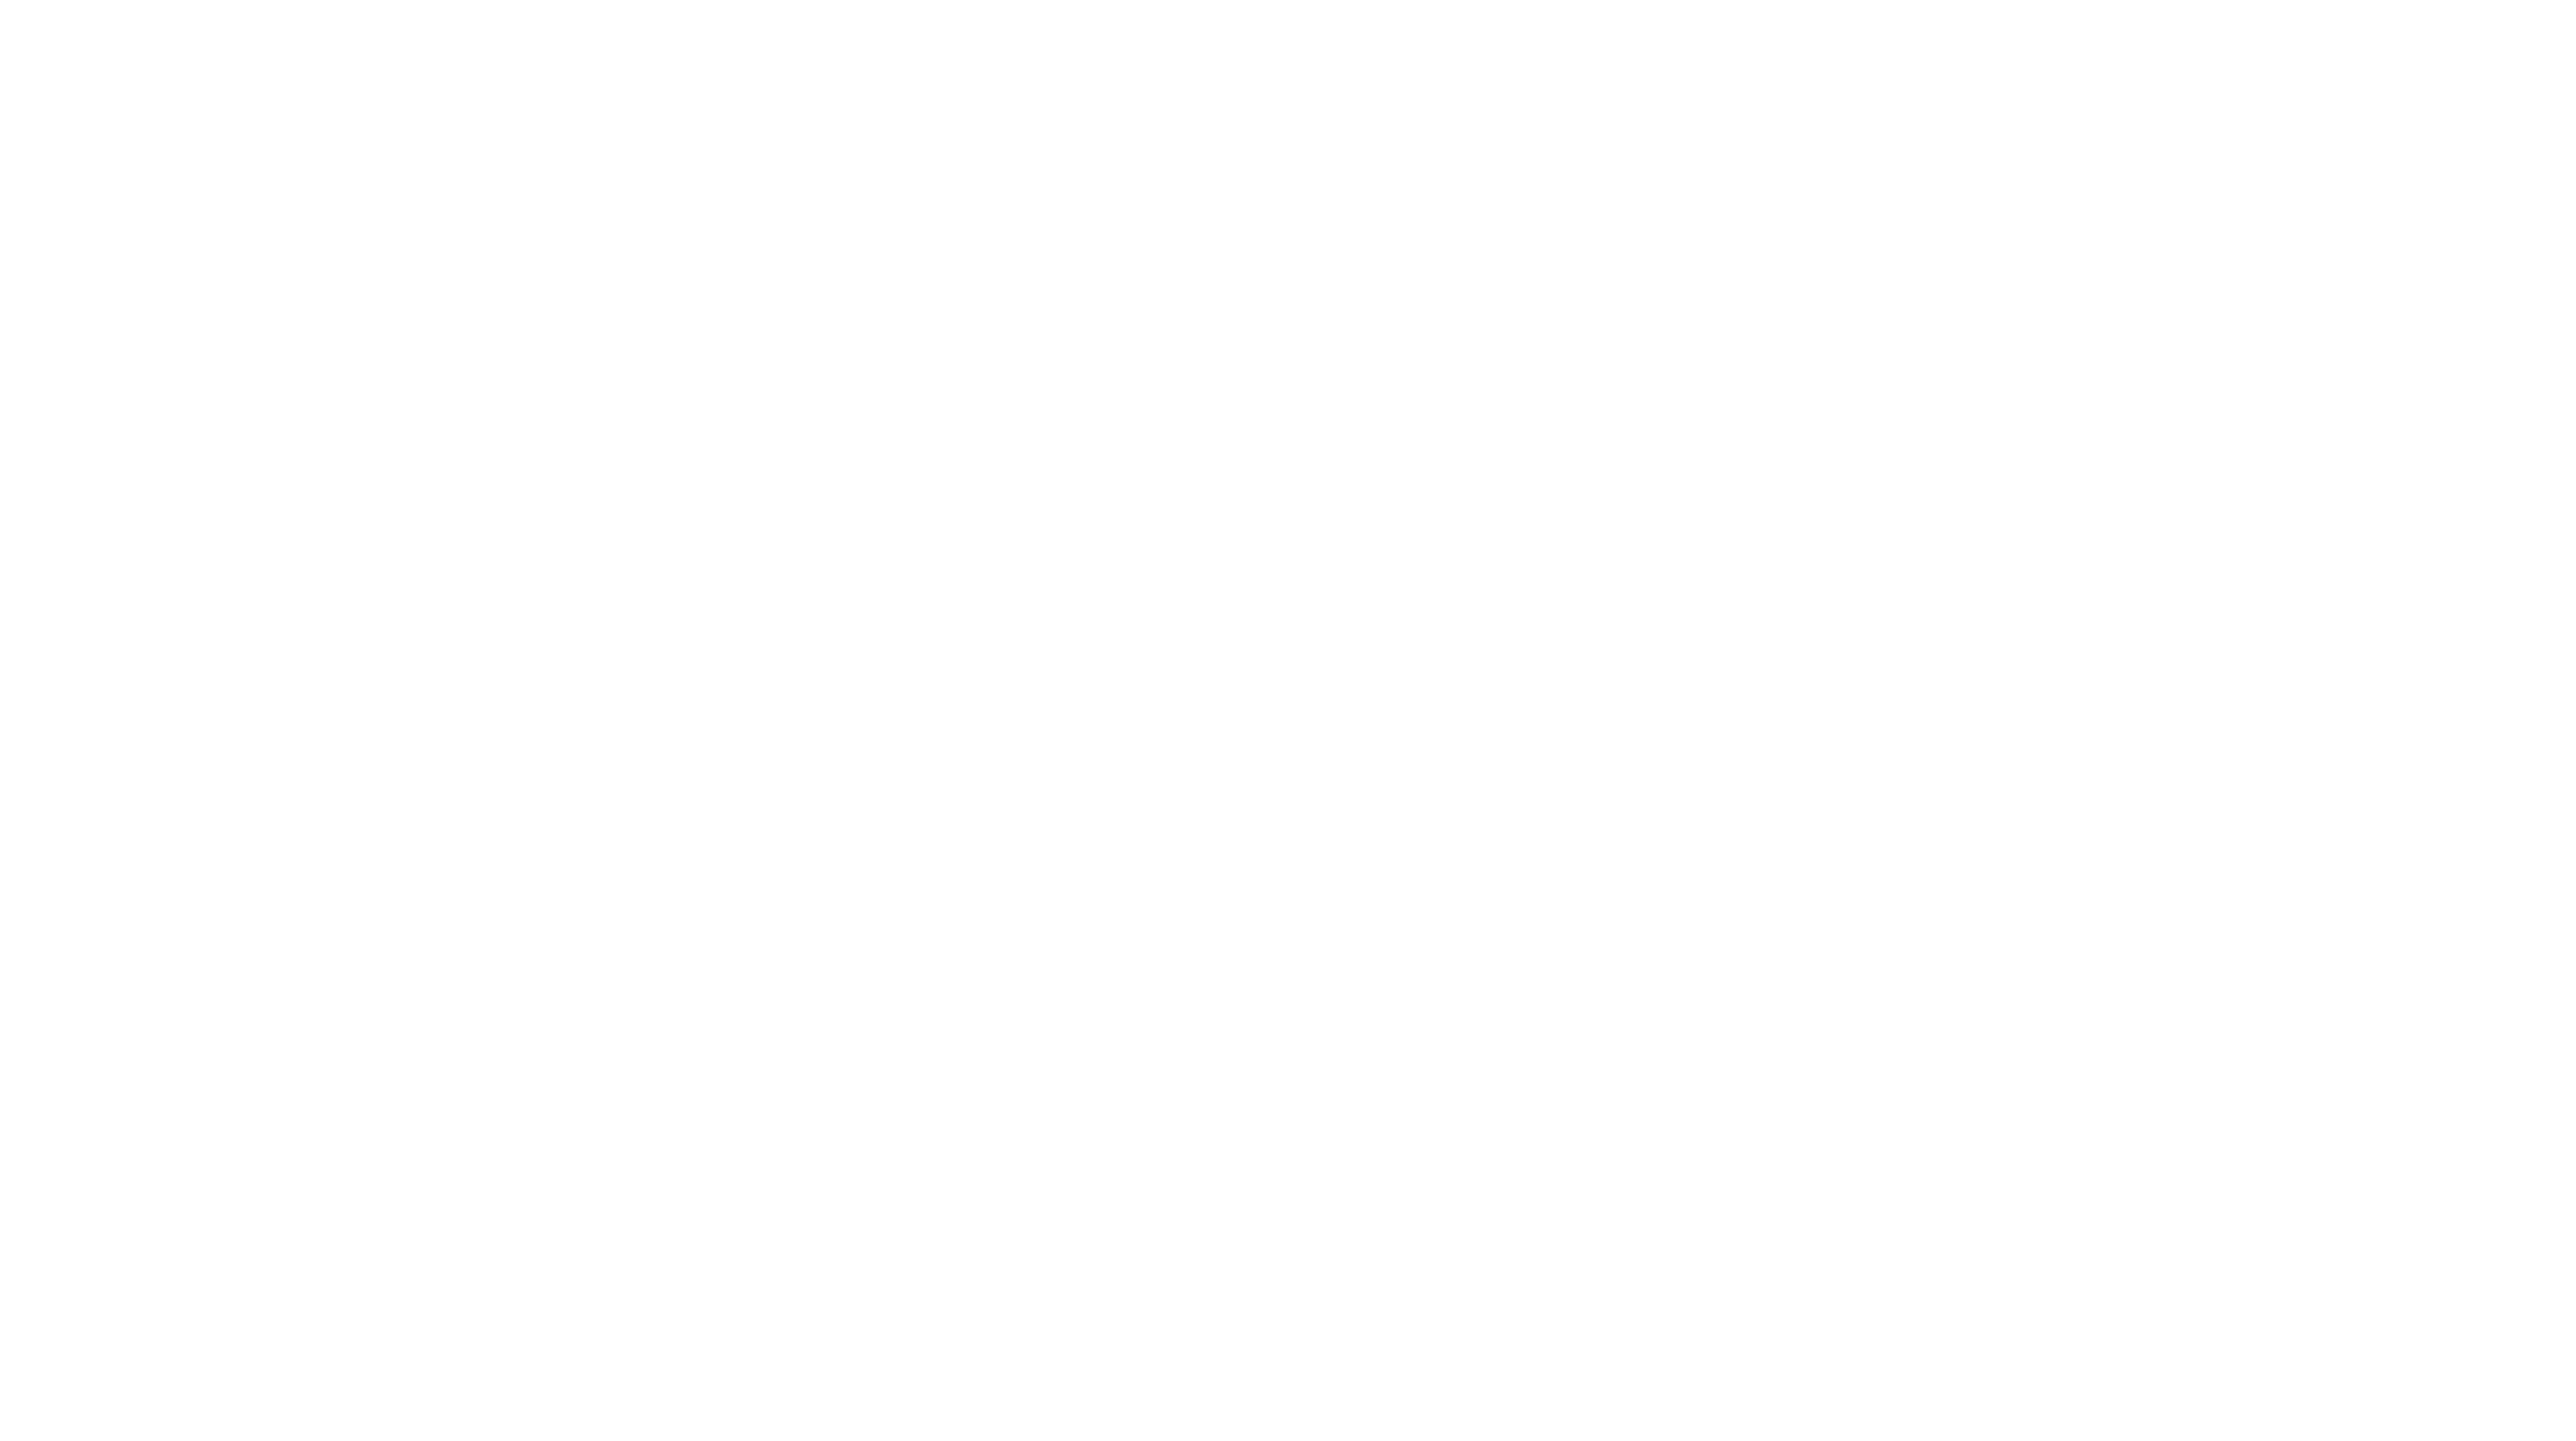 logo Efleetcon